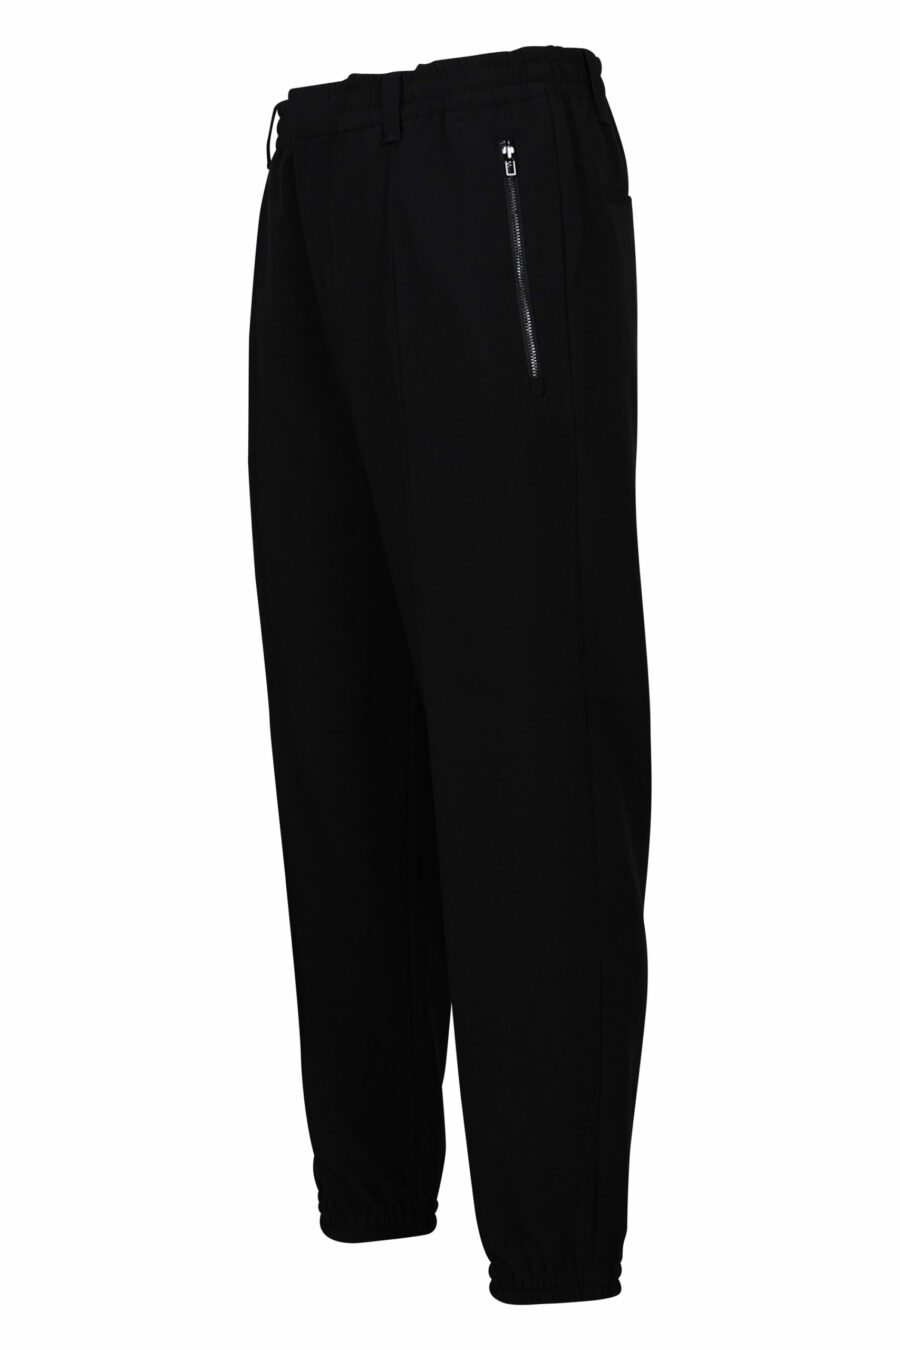 Pantalon noir avec mini-logo - 8057767410278 1 échelle